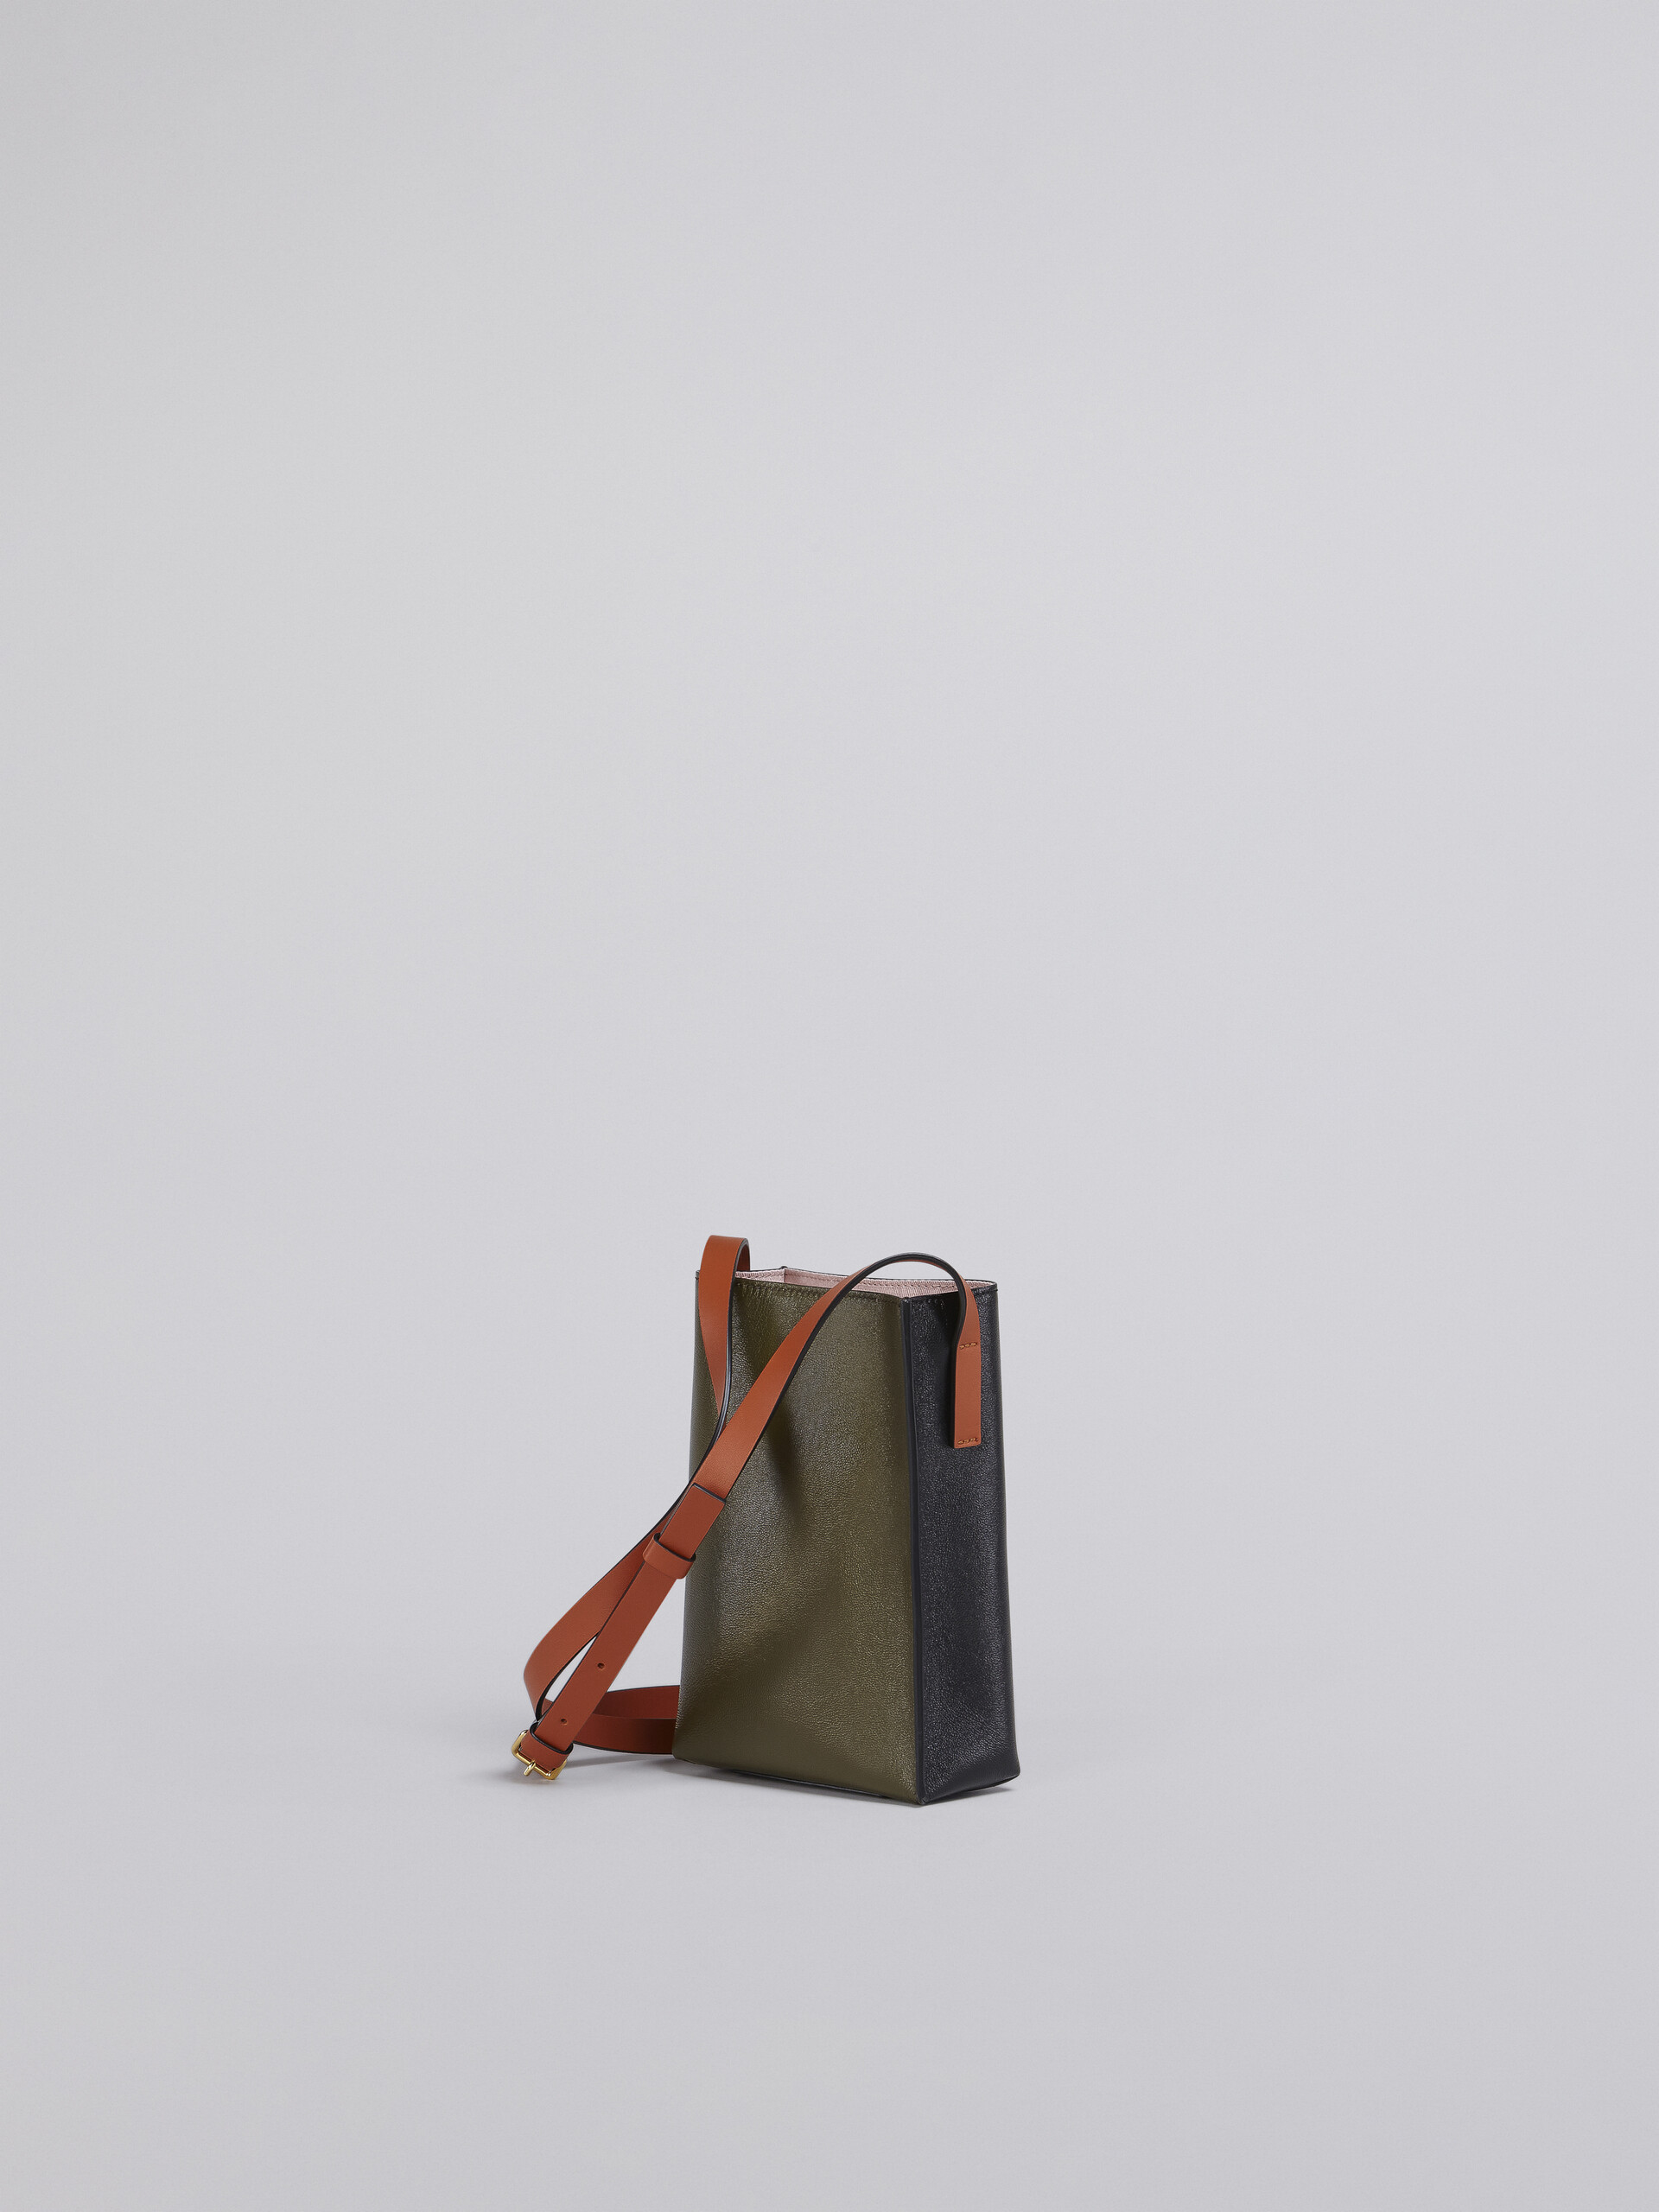 Museo Soft Nano Bag in black and grey leather - Shoulder Bag - Image 3